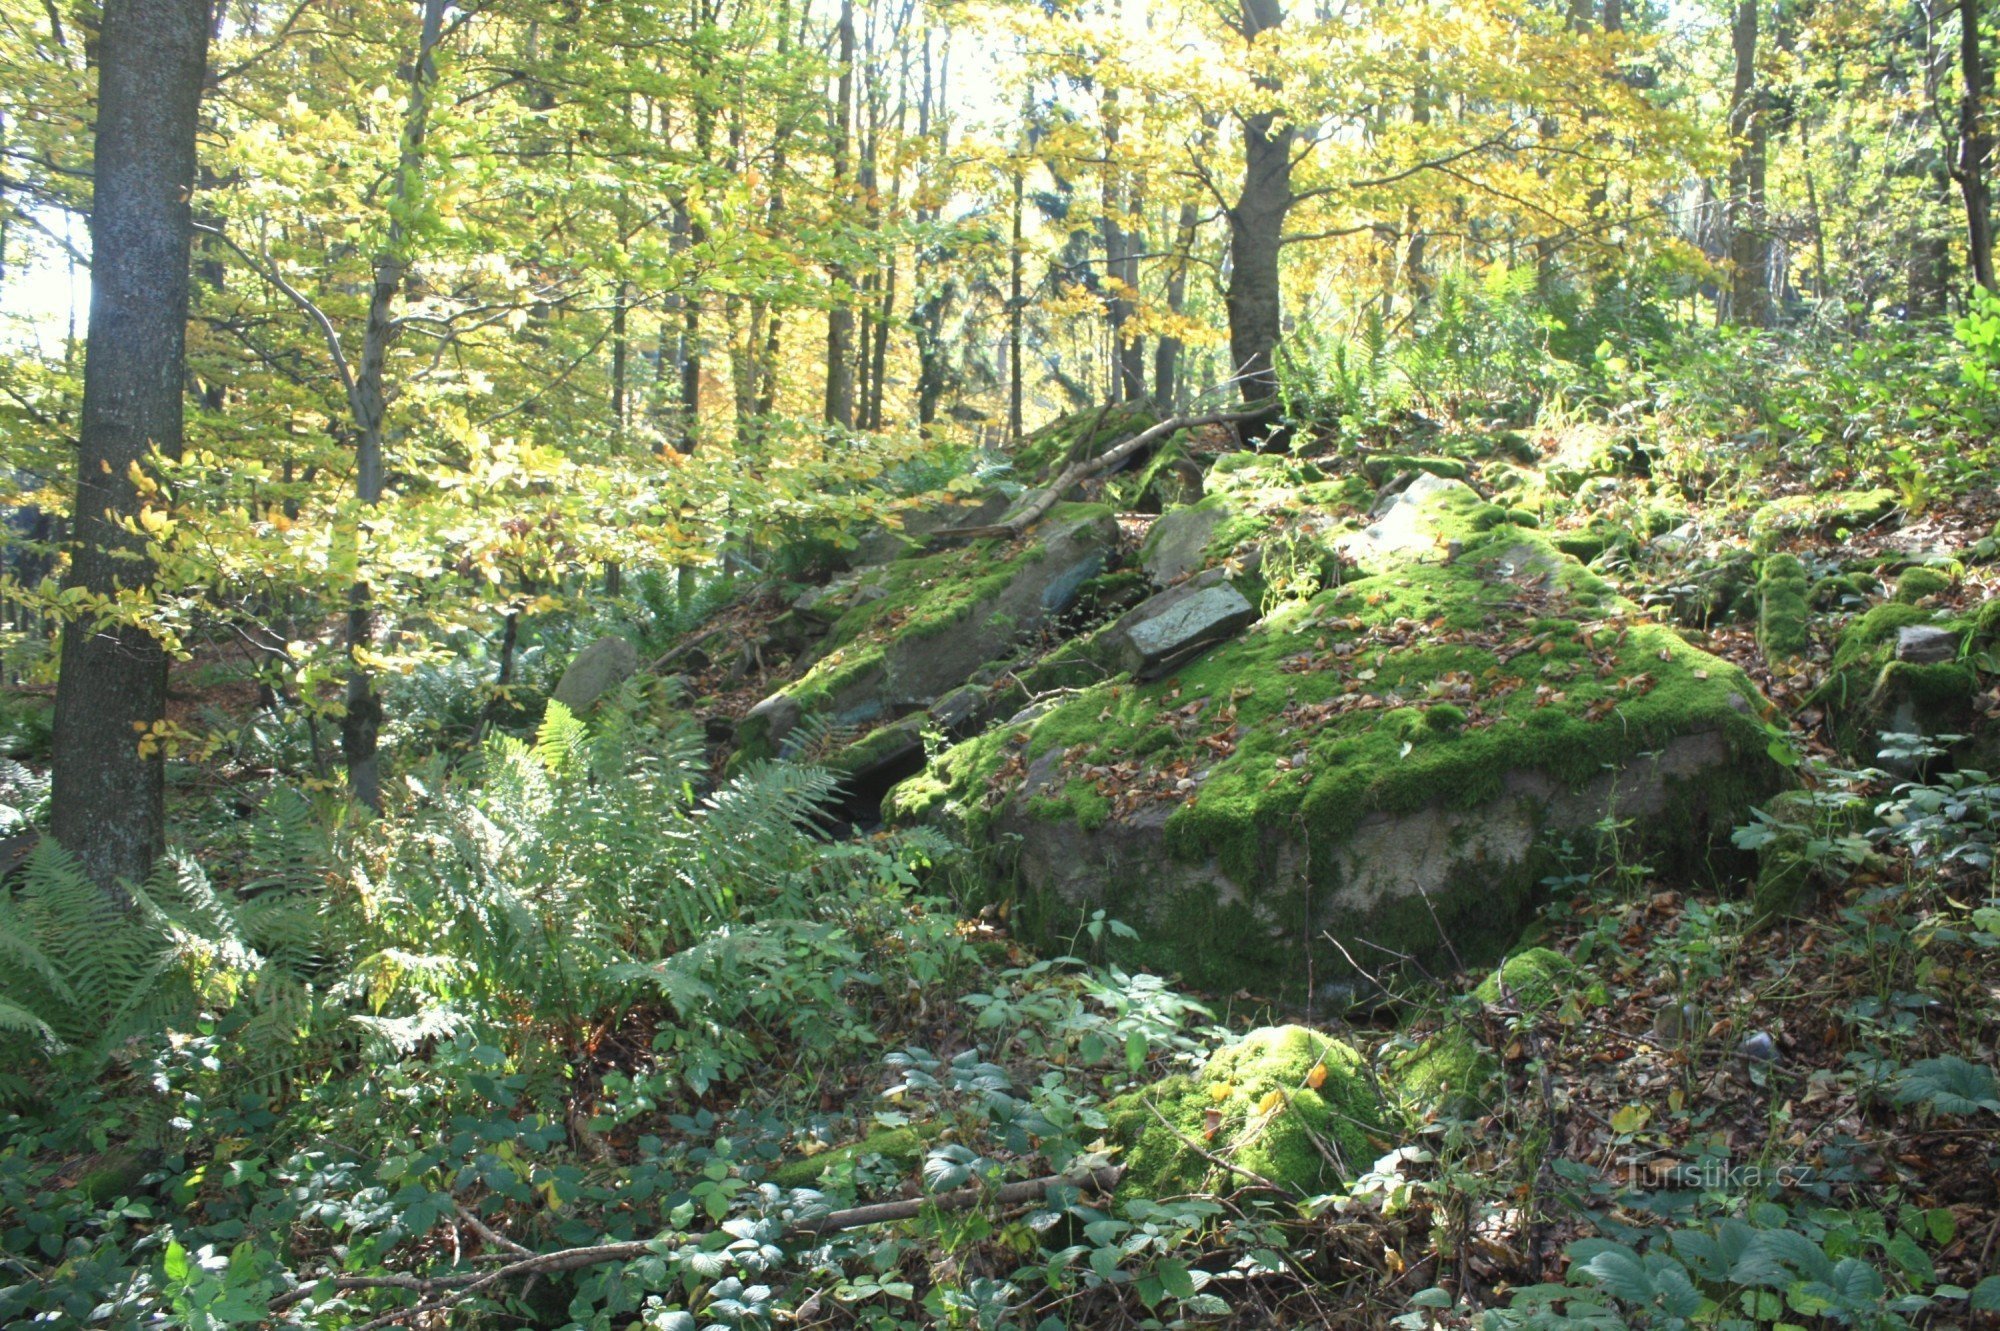 Rock rubble on the edge of the ridge